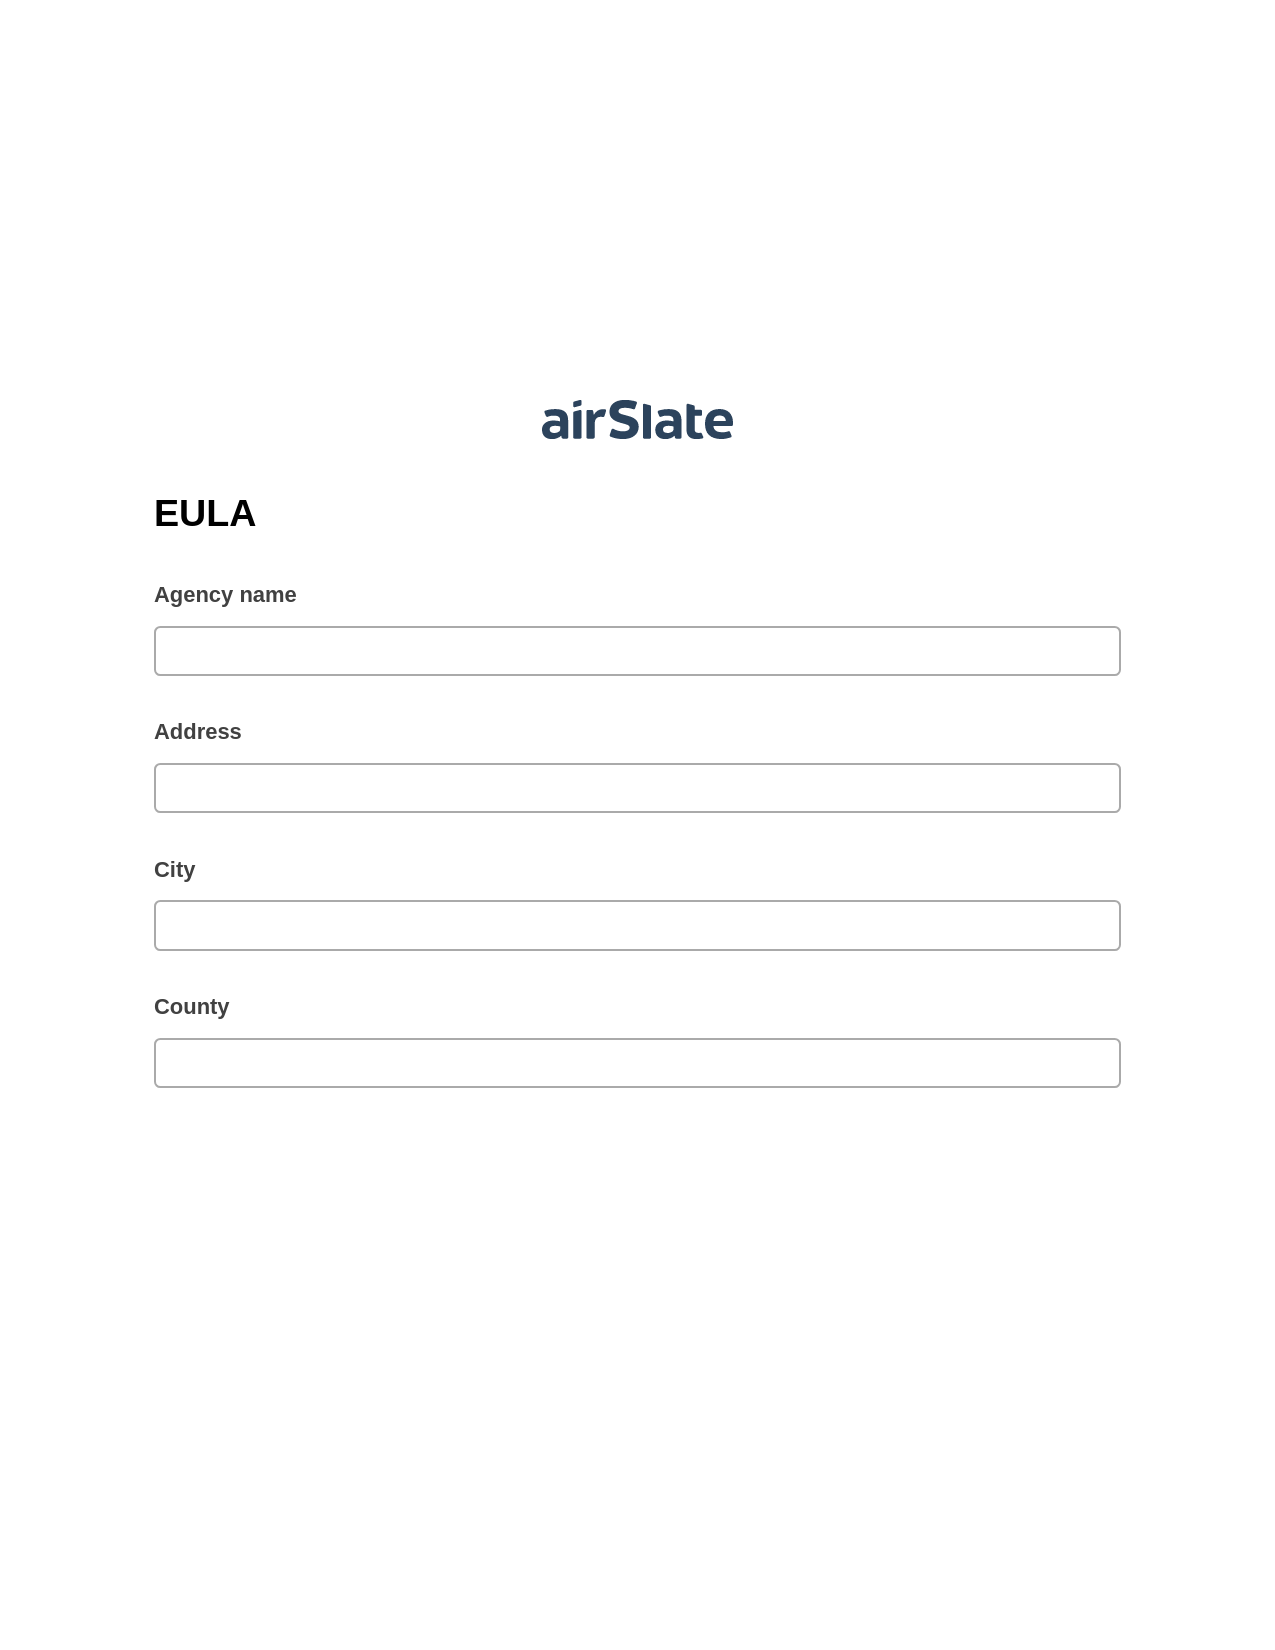 EULA Pre-fill from Google Sheet Dropdown Options Bot, Webhook Bot, Text Message Notification Postfinish Bot